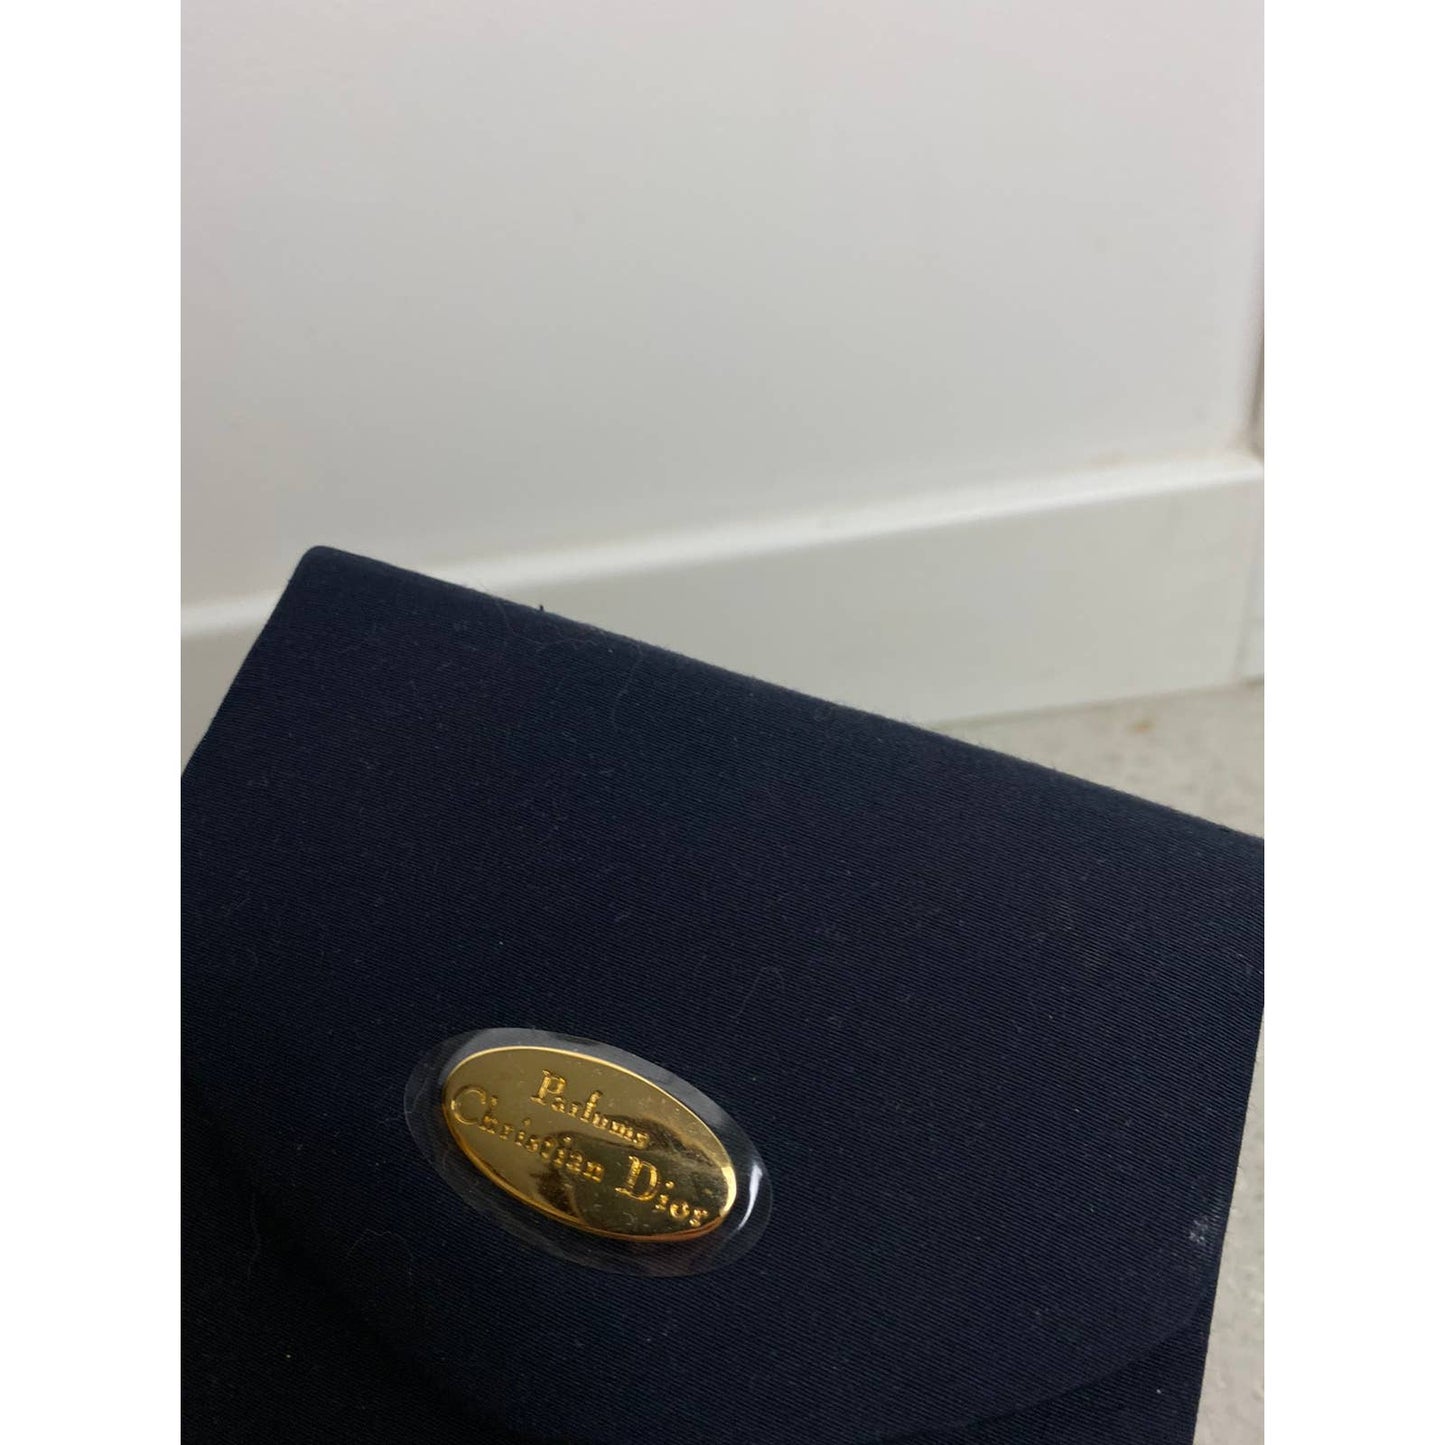 Christian Dior parfums small hand bag black golden vintage